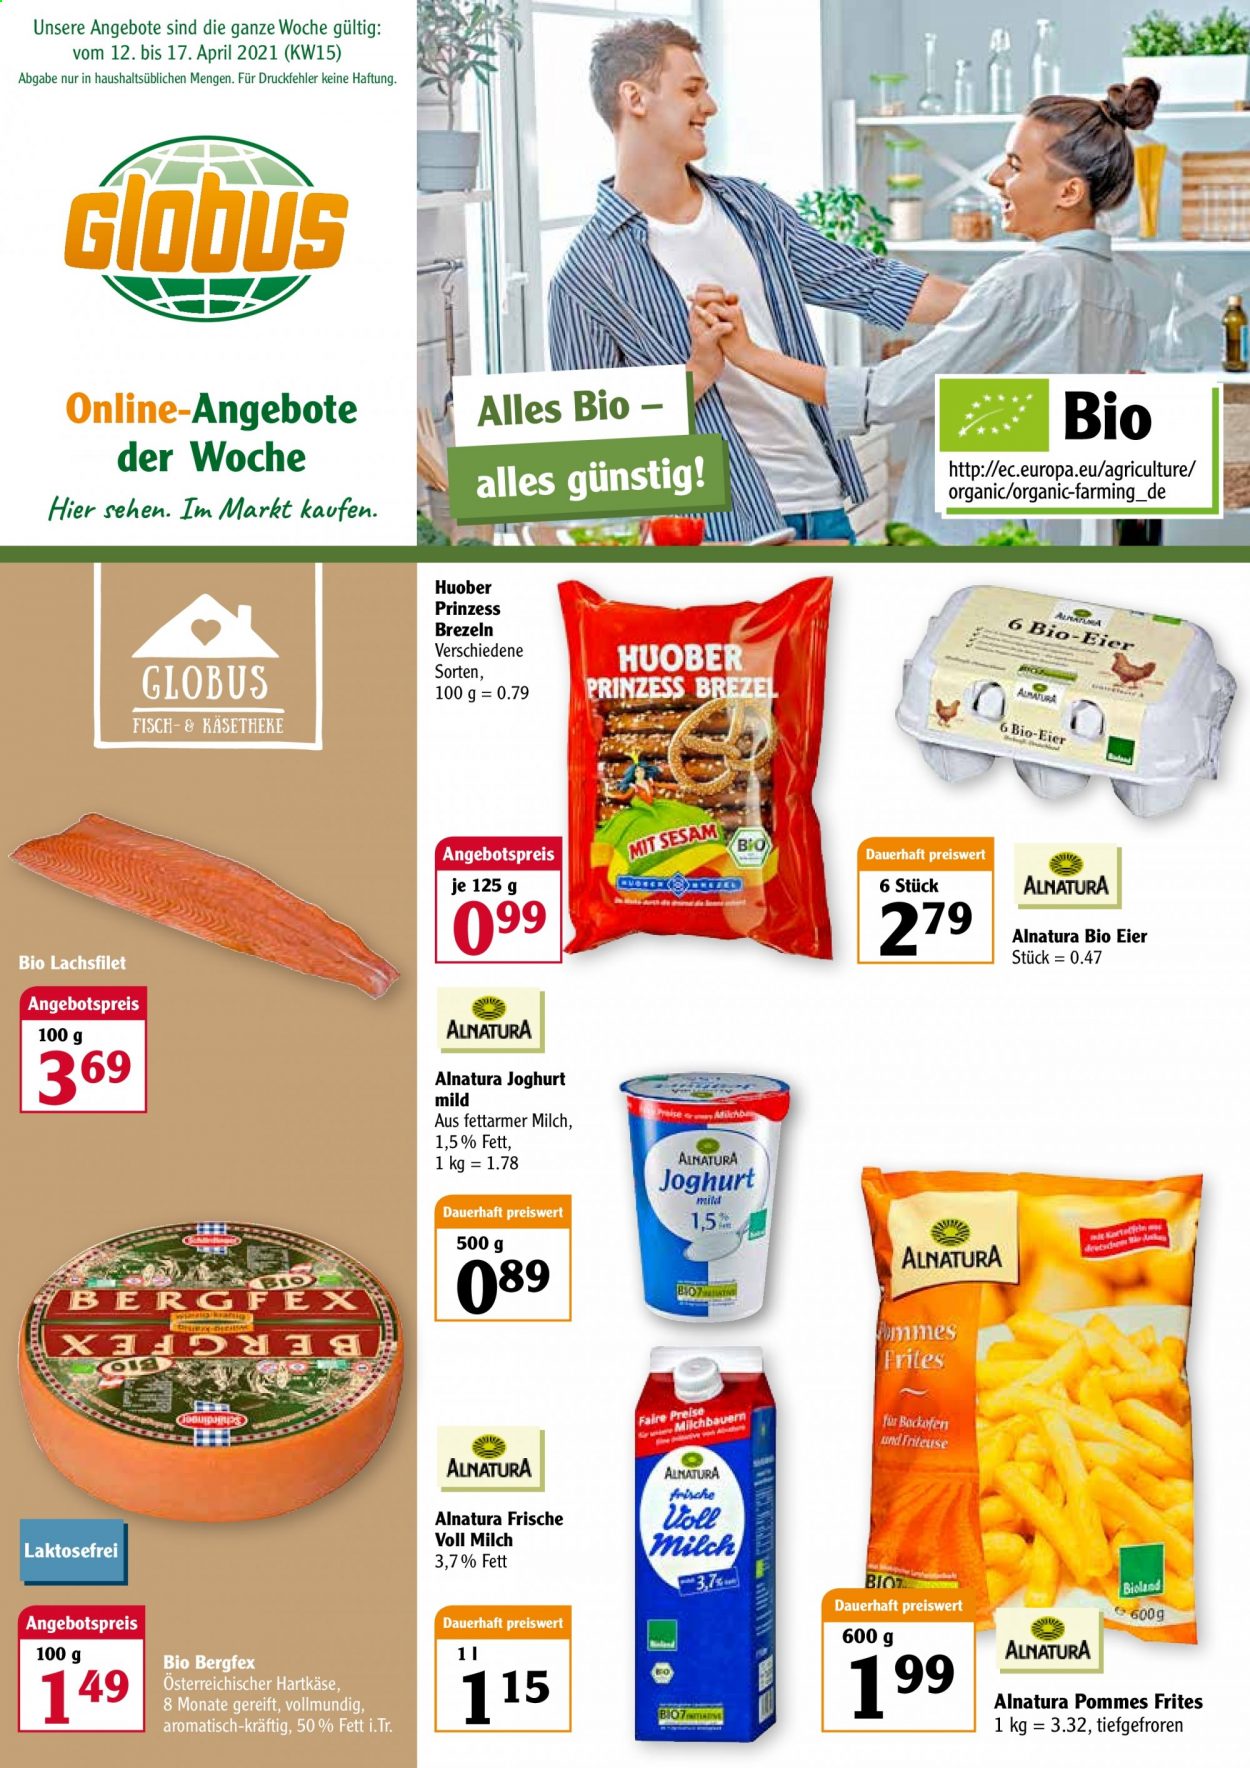 thumbnail - Prospekte Globus - 12.04.2021 - 17.04.2021 - Produkte in Aktion - Lachsfilet, Hartkäse, Joghurt, Milch, Eier, Pommes Frites. Seite 1.